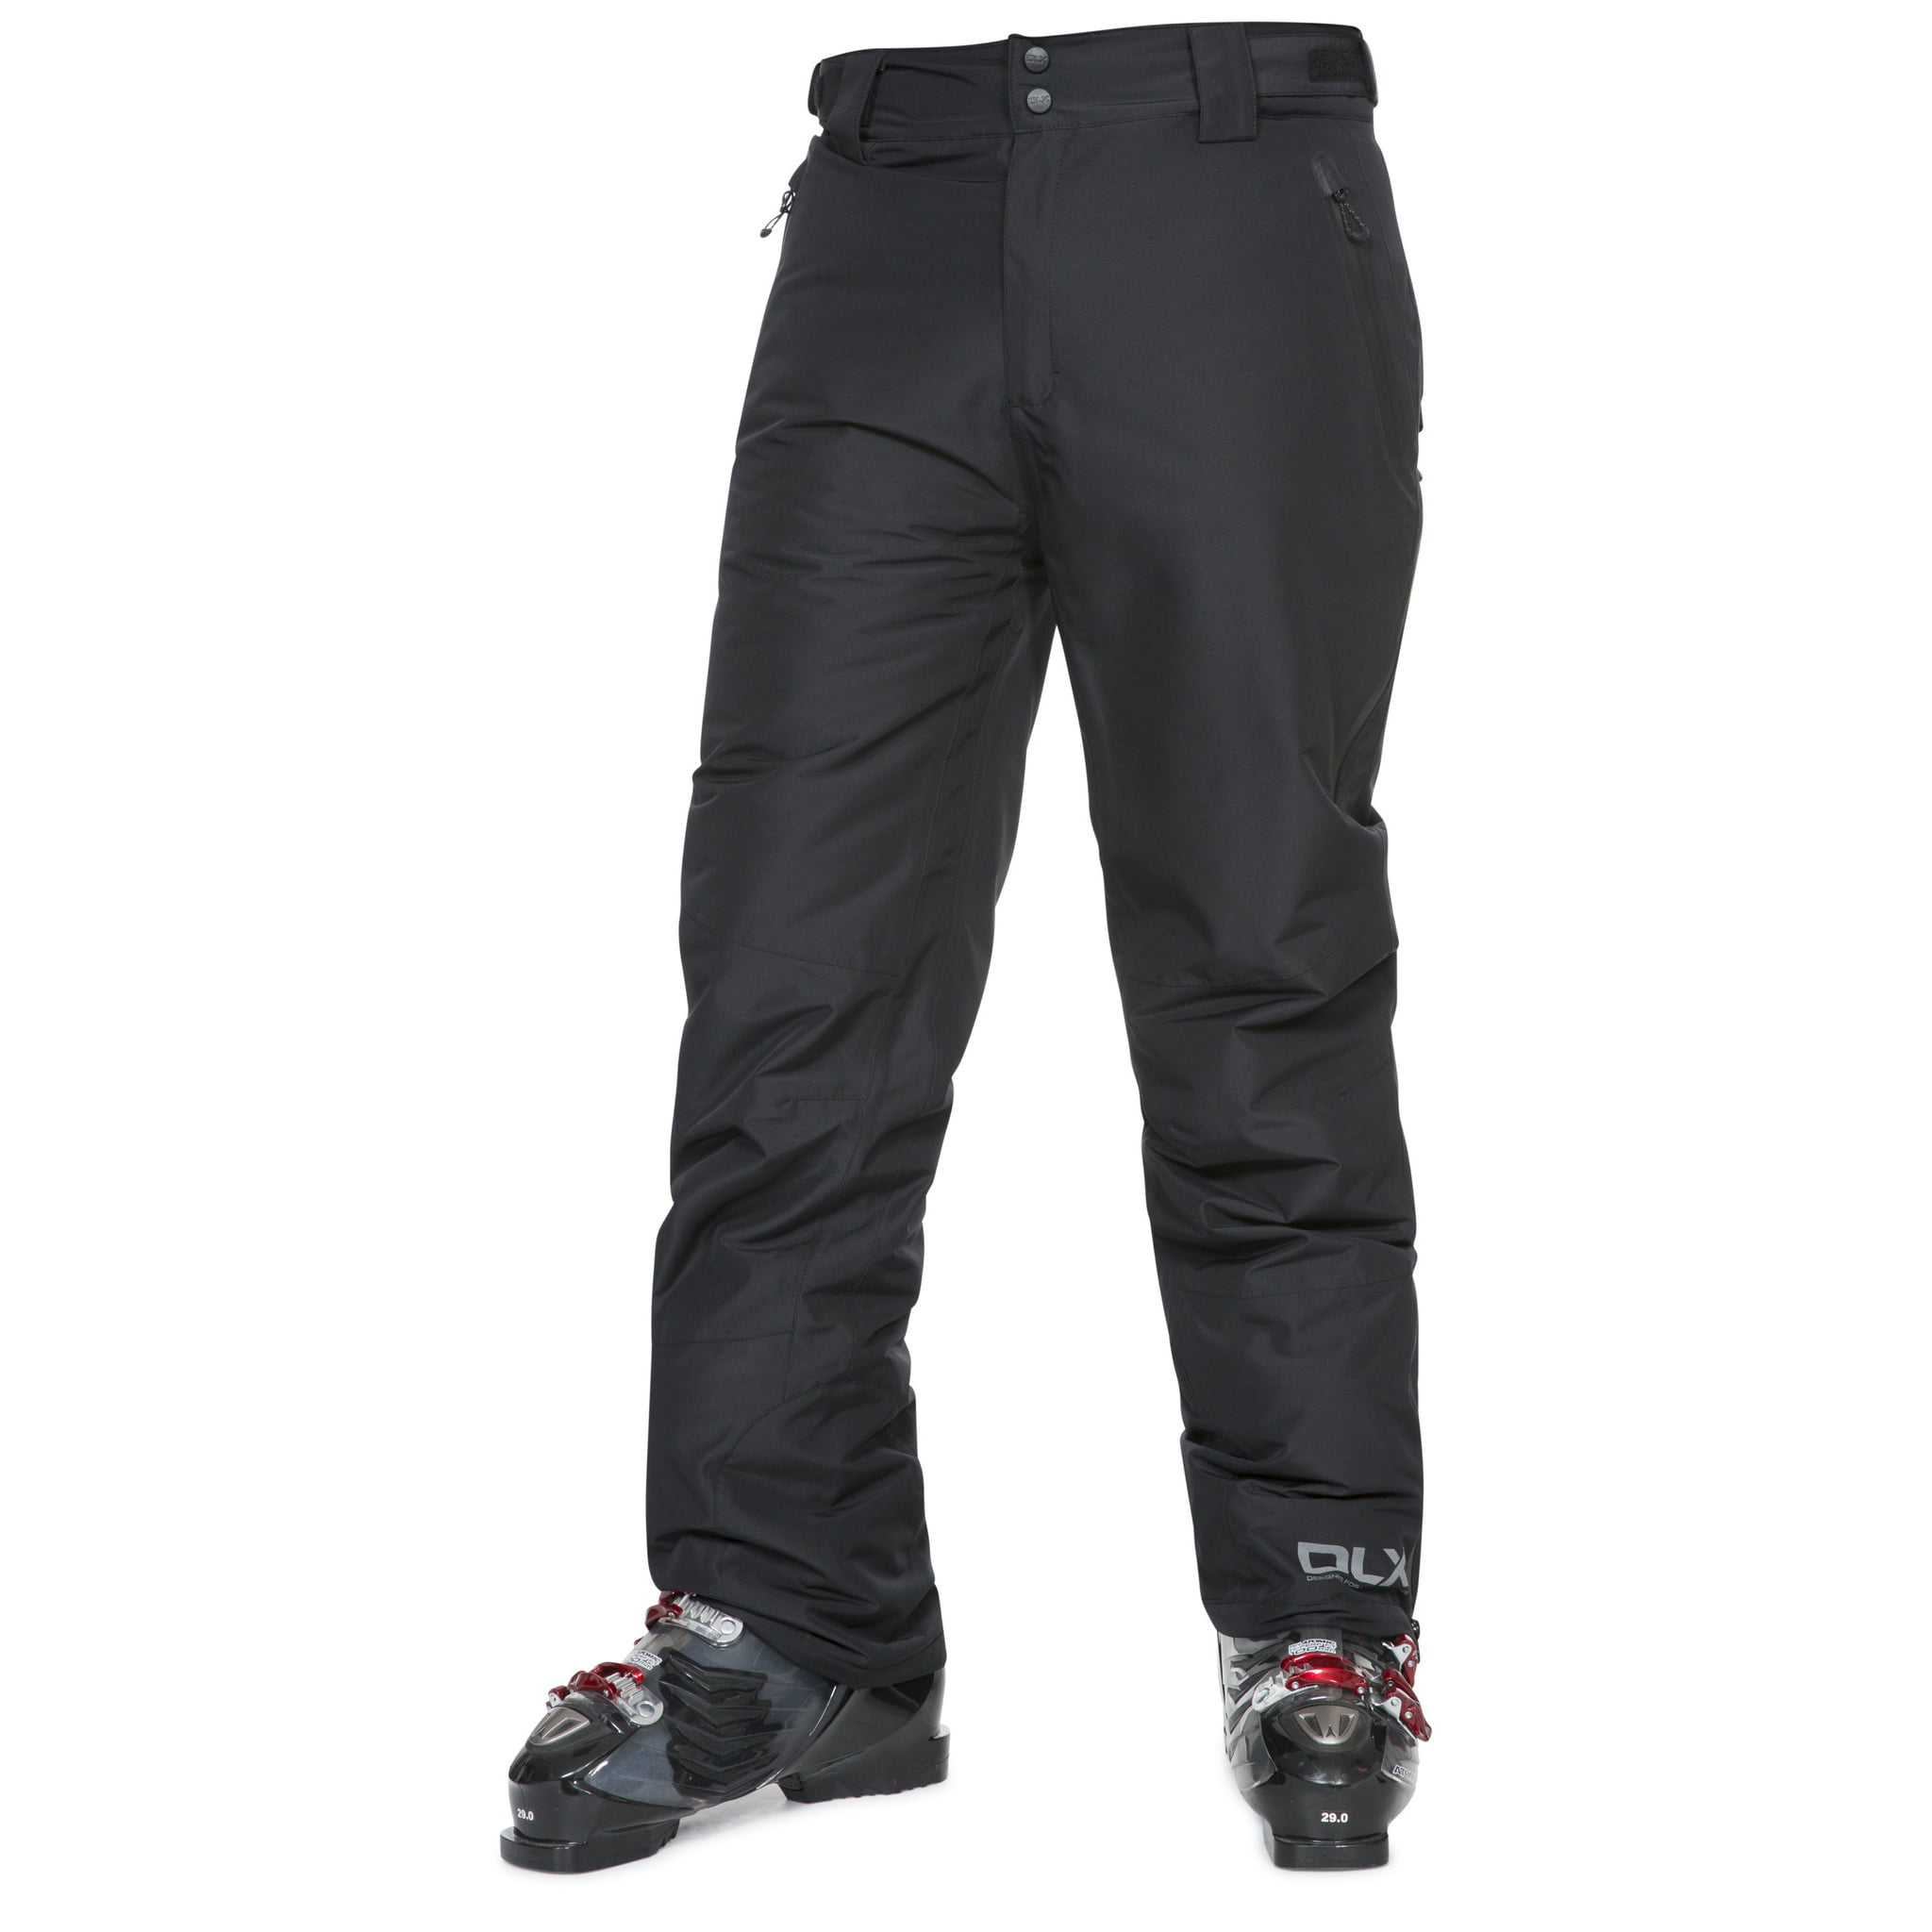 Men BOULDER GEAR Kodiak black Insulated Snow Ski Pant S M L XL 2XL Full Side Zip 